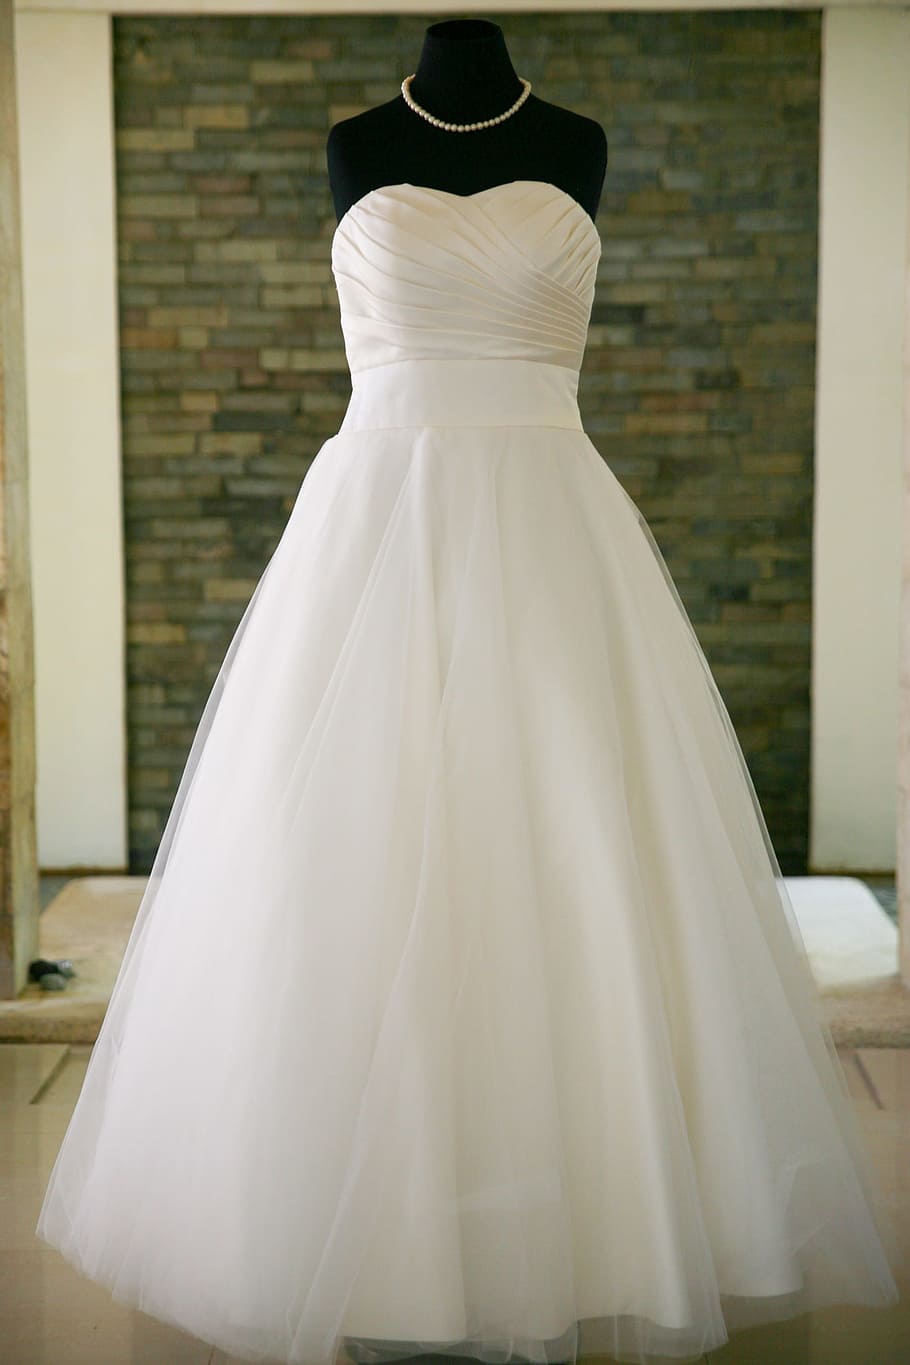 wedding dress, white, marriage, wedding, dress, celebration, event, newlywed, fashion, bride